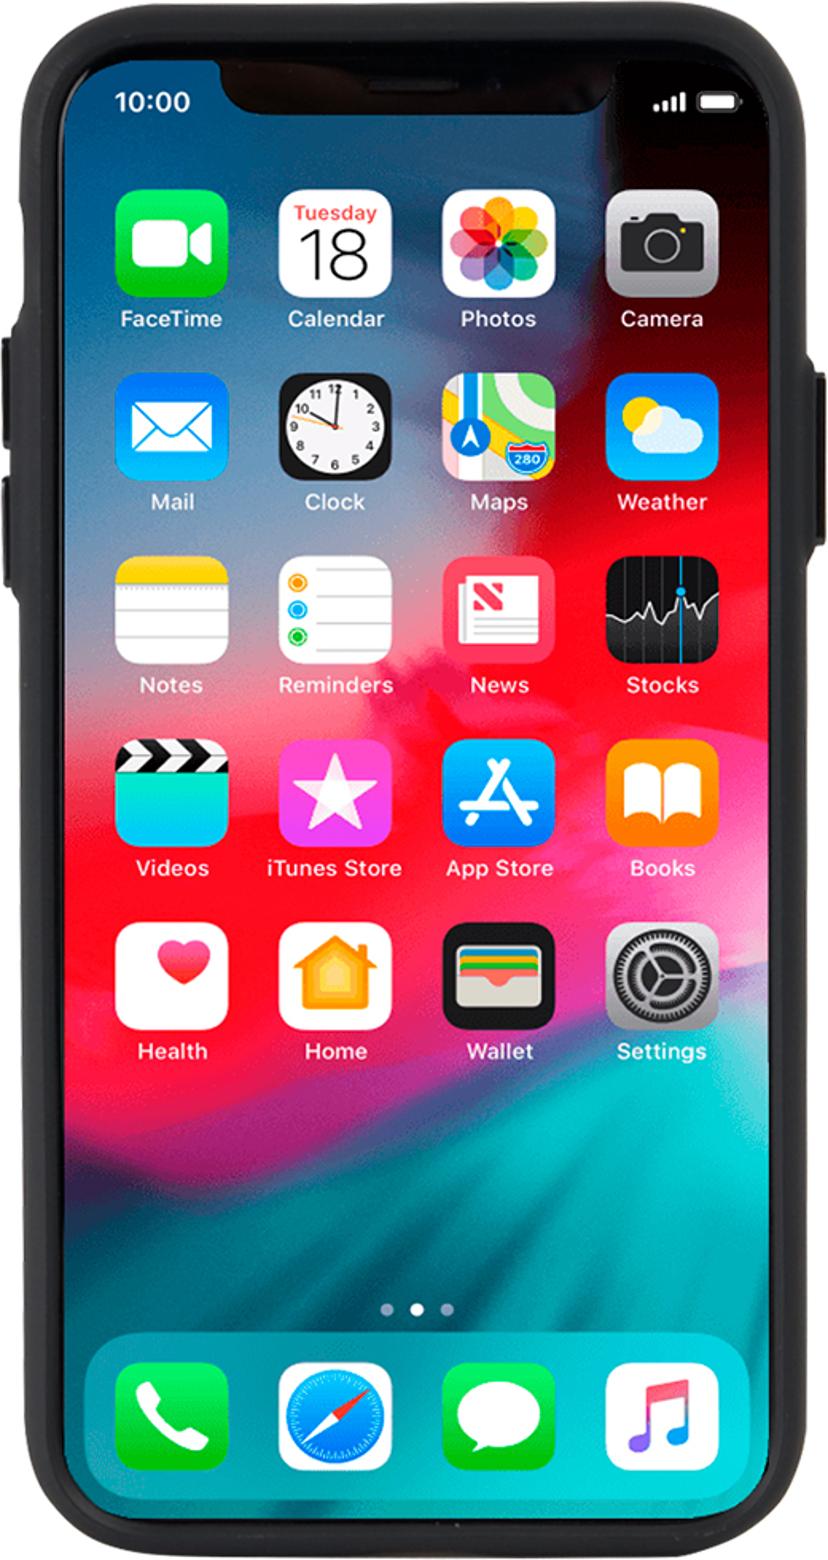 Cirafon Fusion Case For Iphone X/xs Transparent/black iPhone X, iPhone Xs Musta